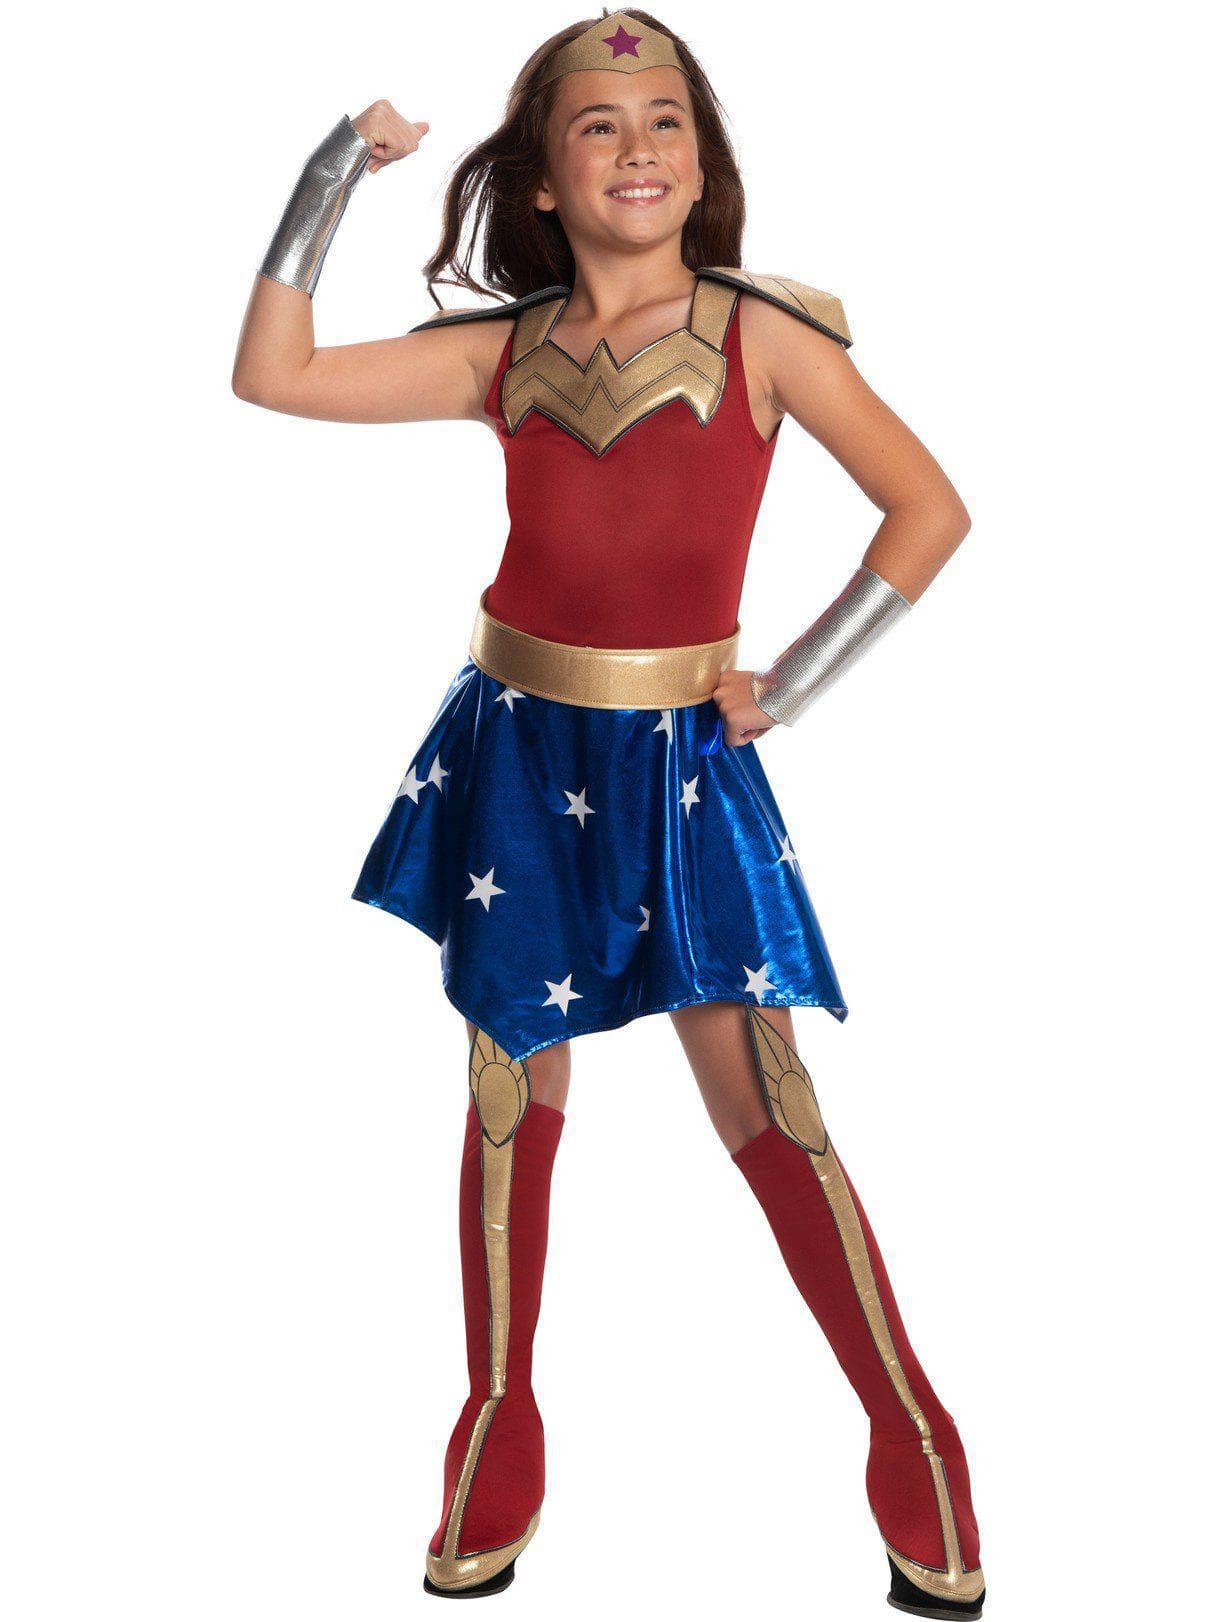 Girls' DC Superhero Girls Wonder Woman Dress and Accessories - costumes.com